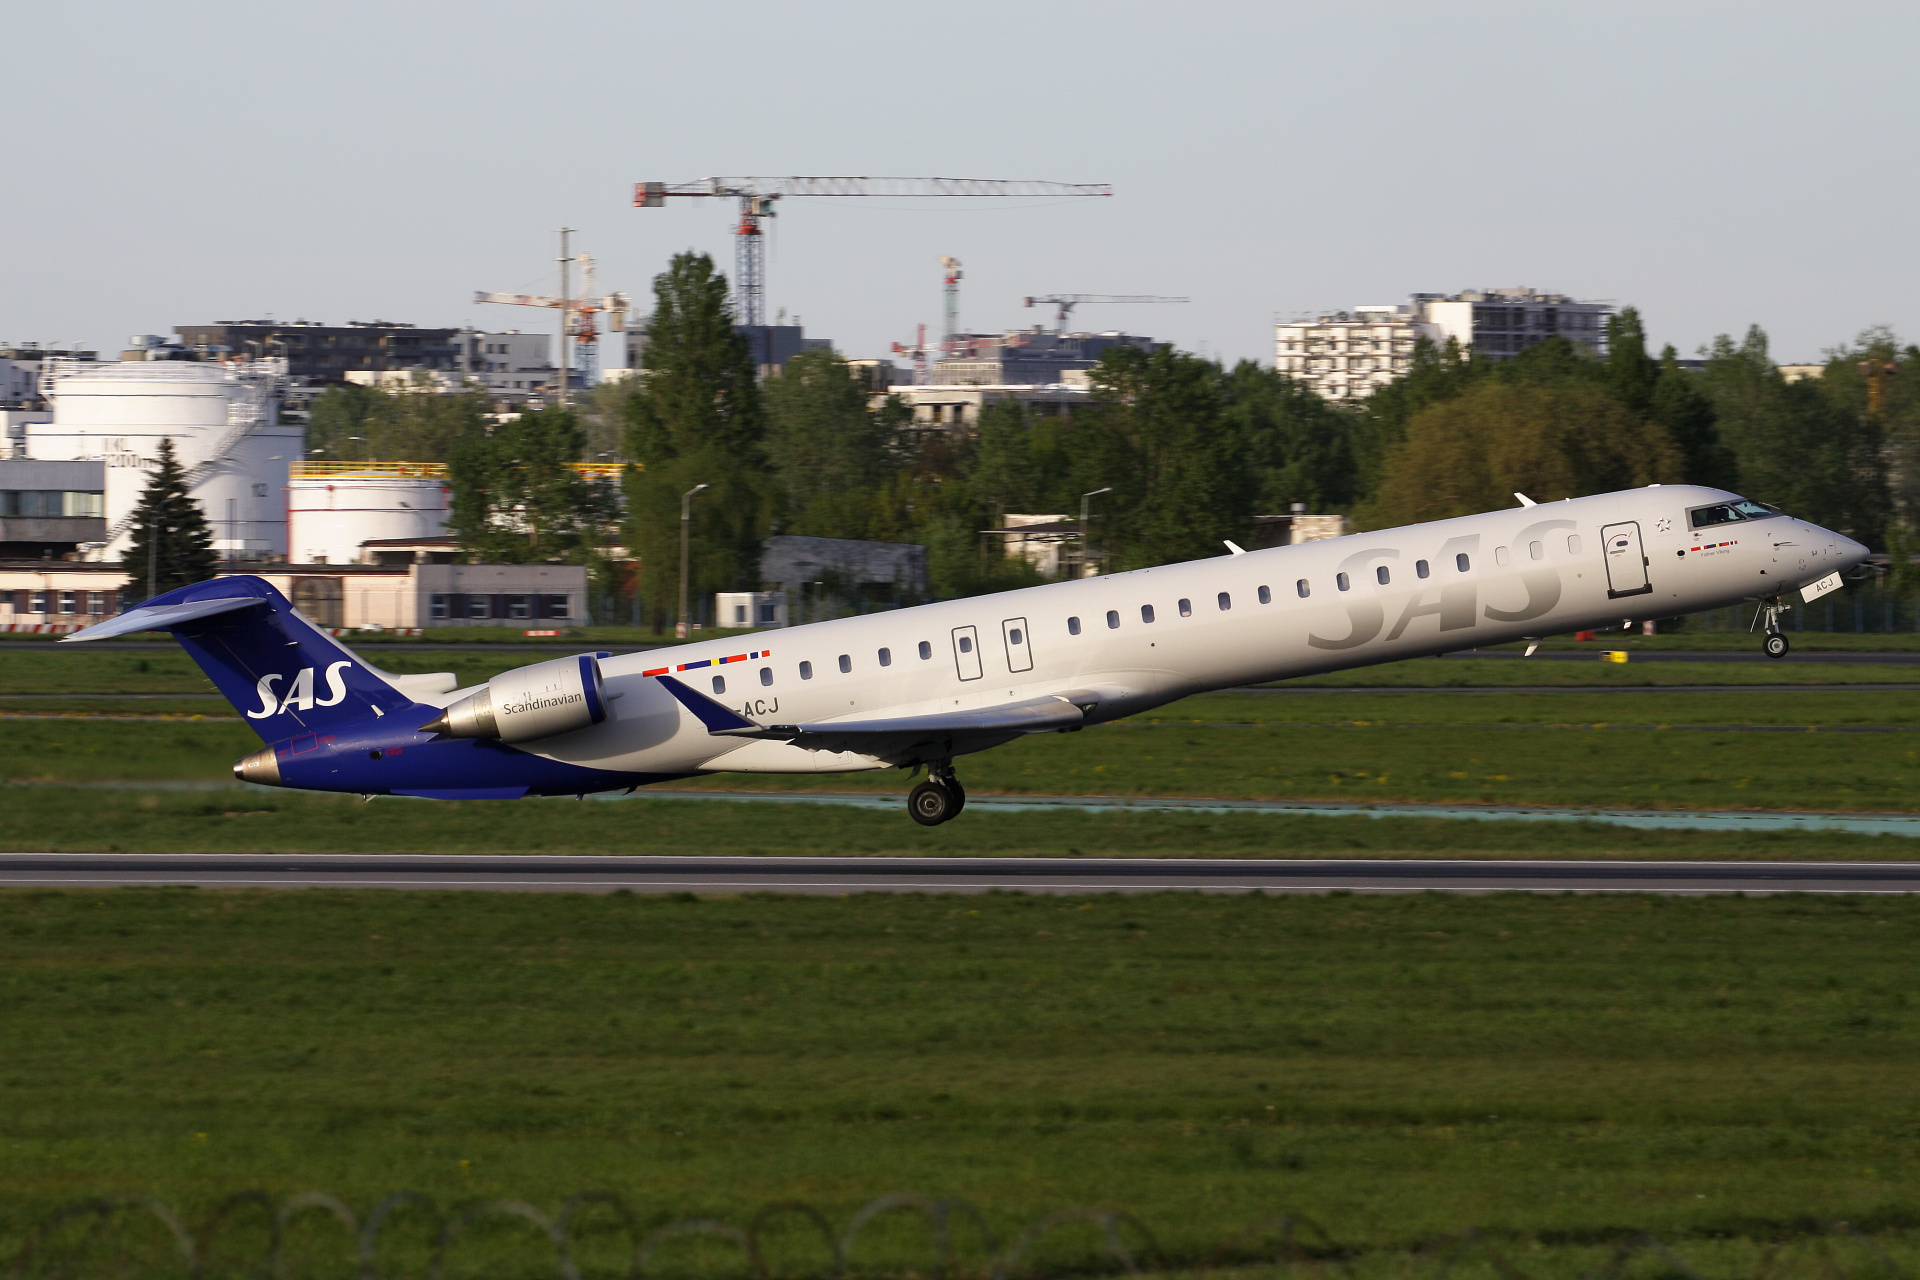 ES-ACJ (Aircraft » EPWA Spotting » Mitsubishi Regional Jet » CRJ-900 » SAS Scandinavian Airlines)